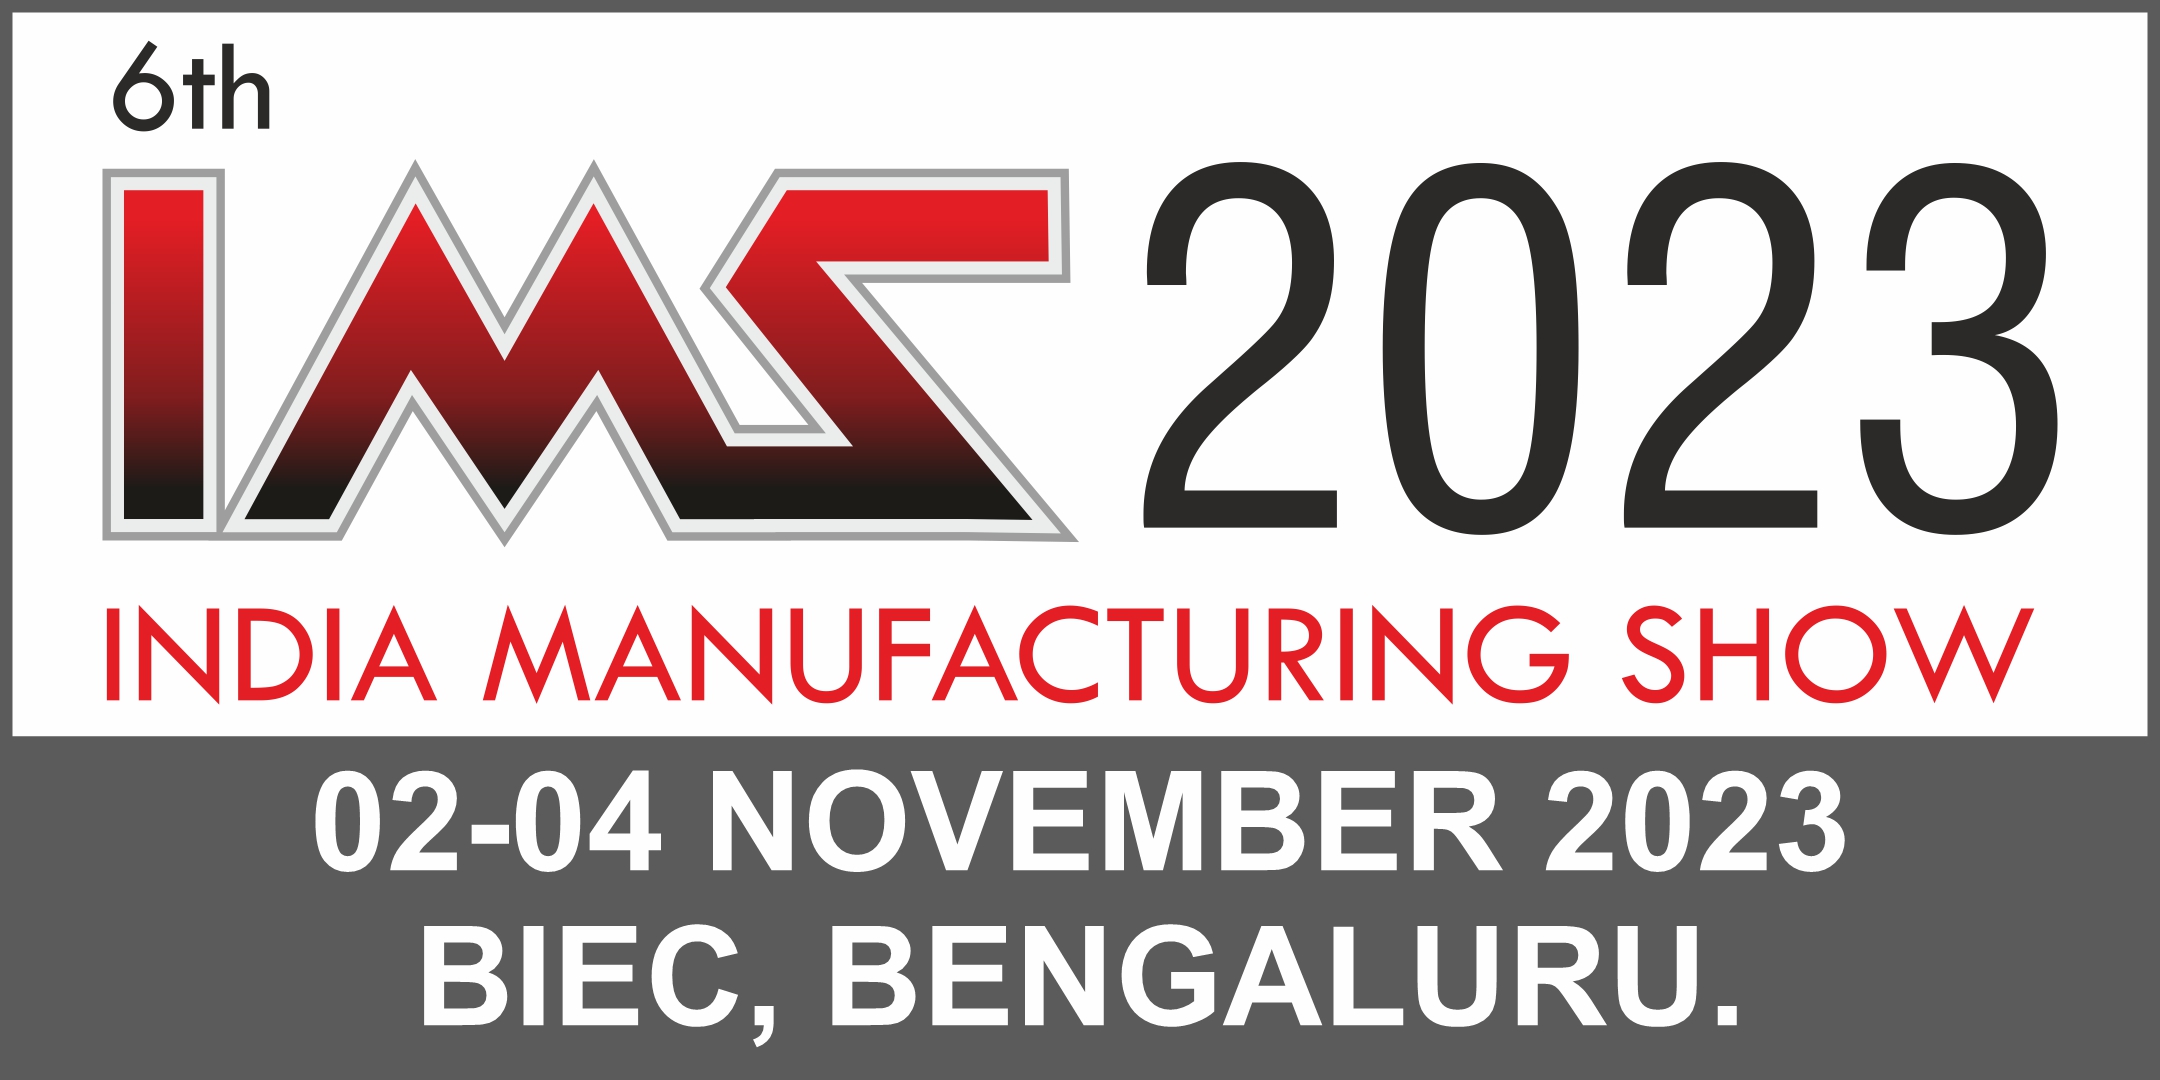 India Manufacturing Show 2023, Bangalore, Karnataka, India